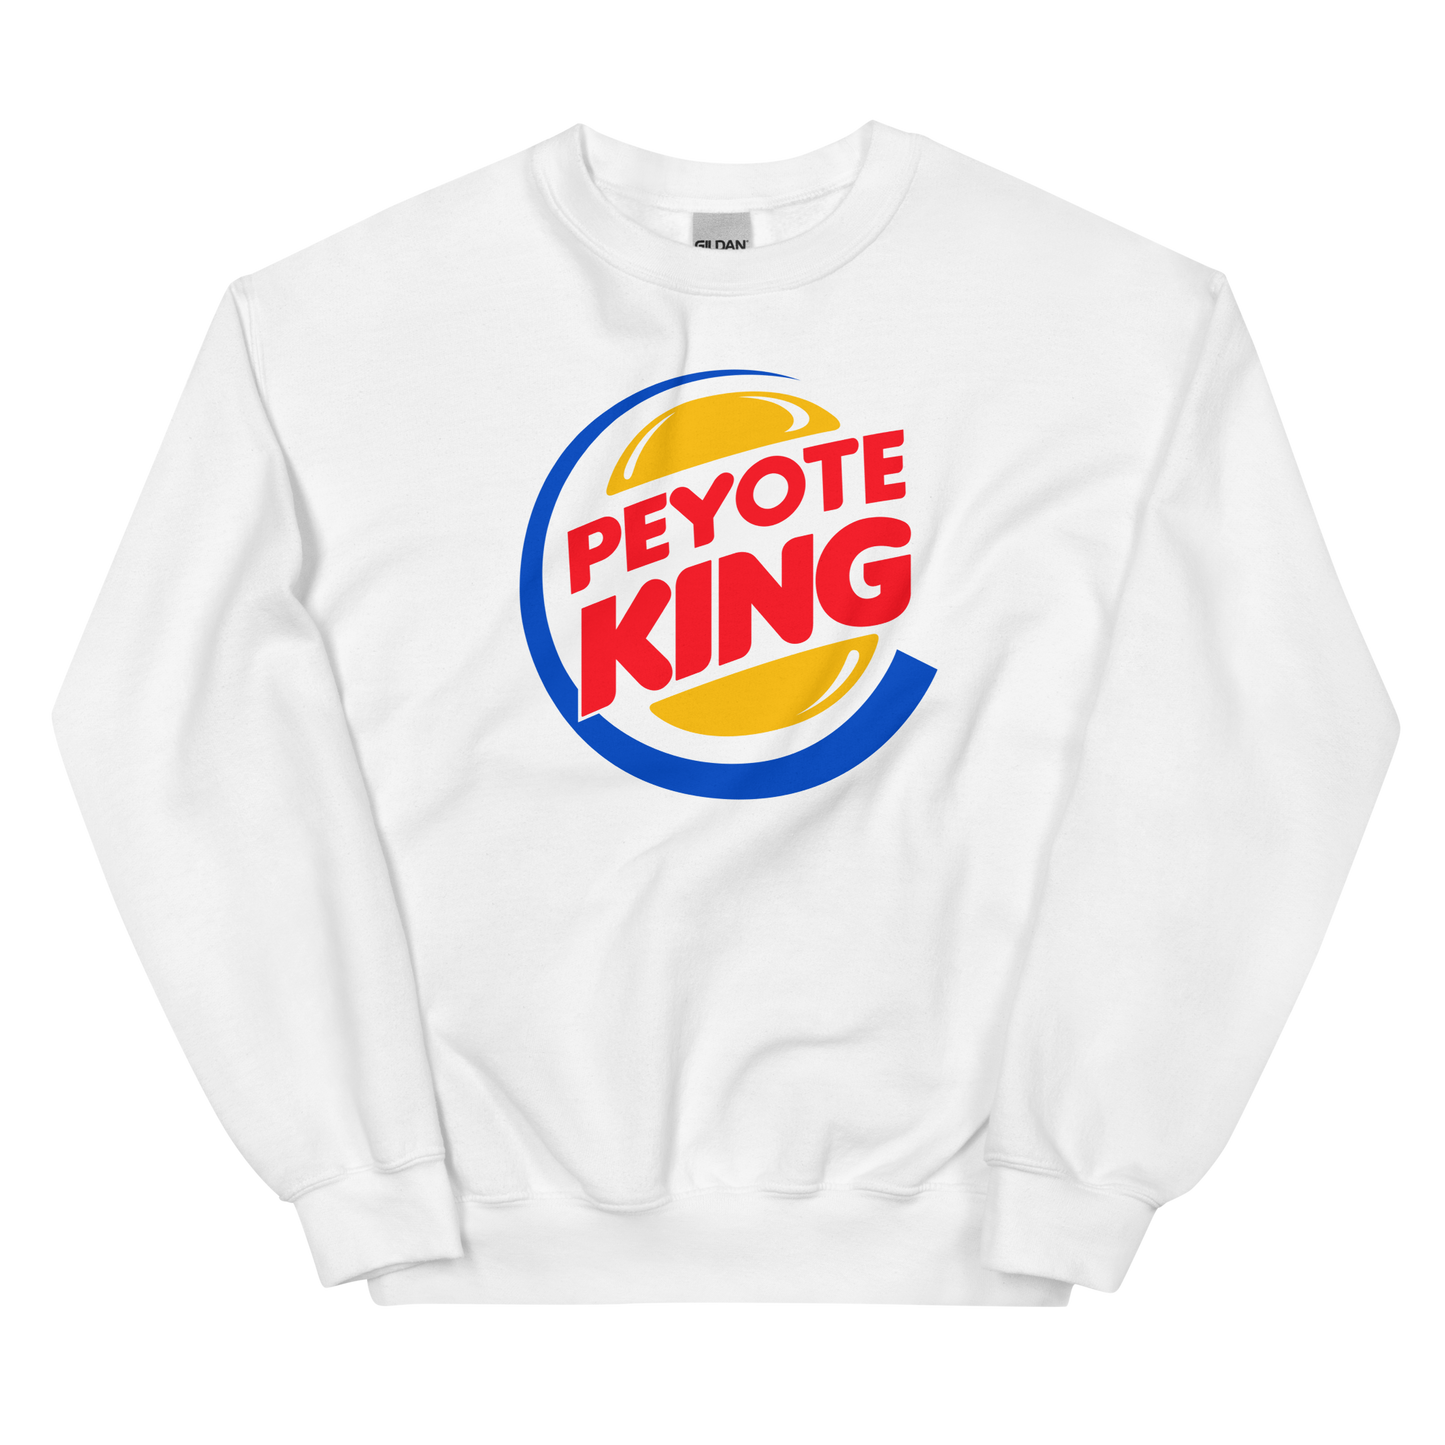 Peyote King Graphic Sweatshirt